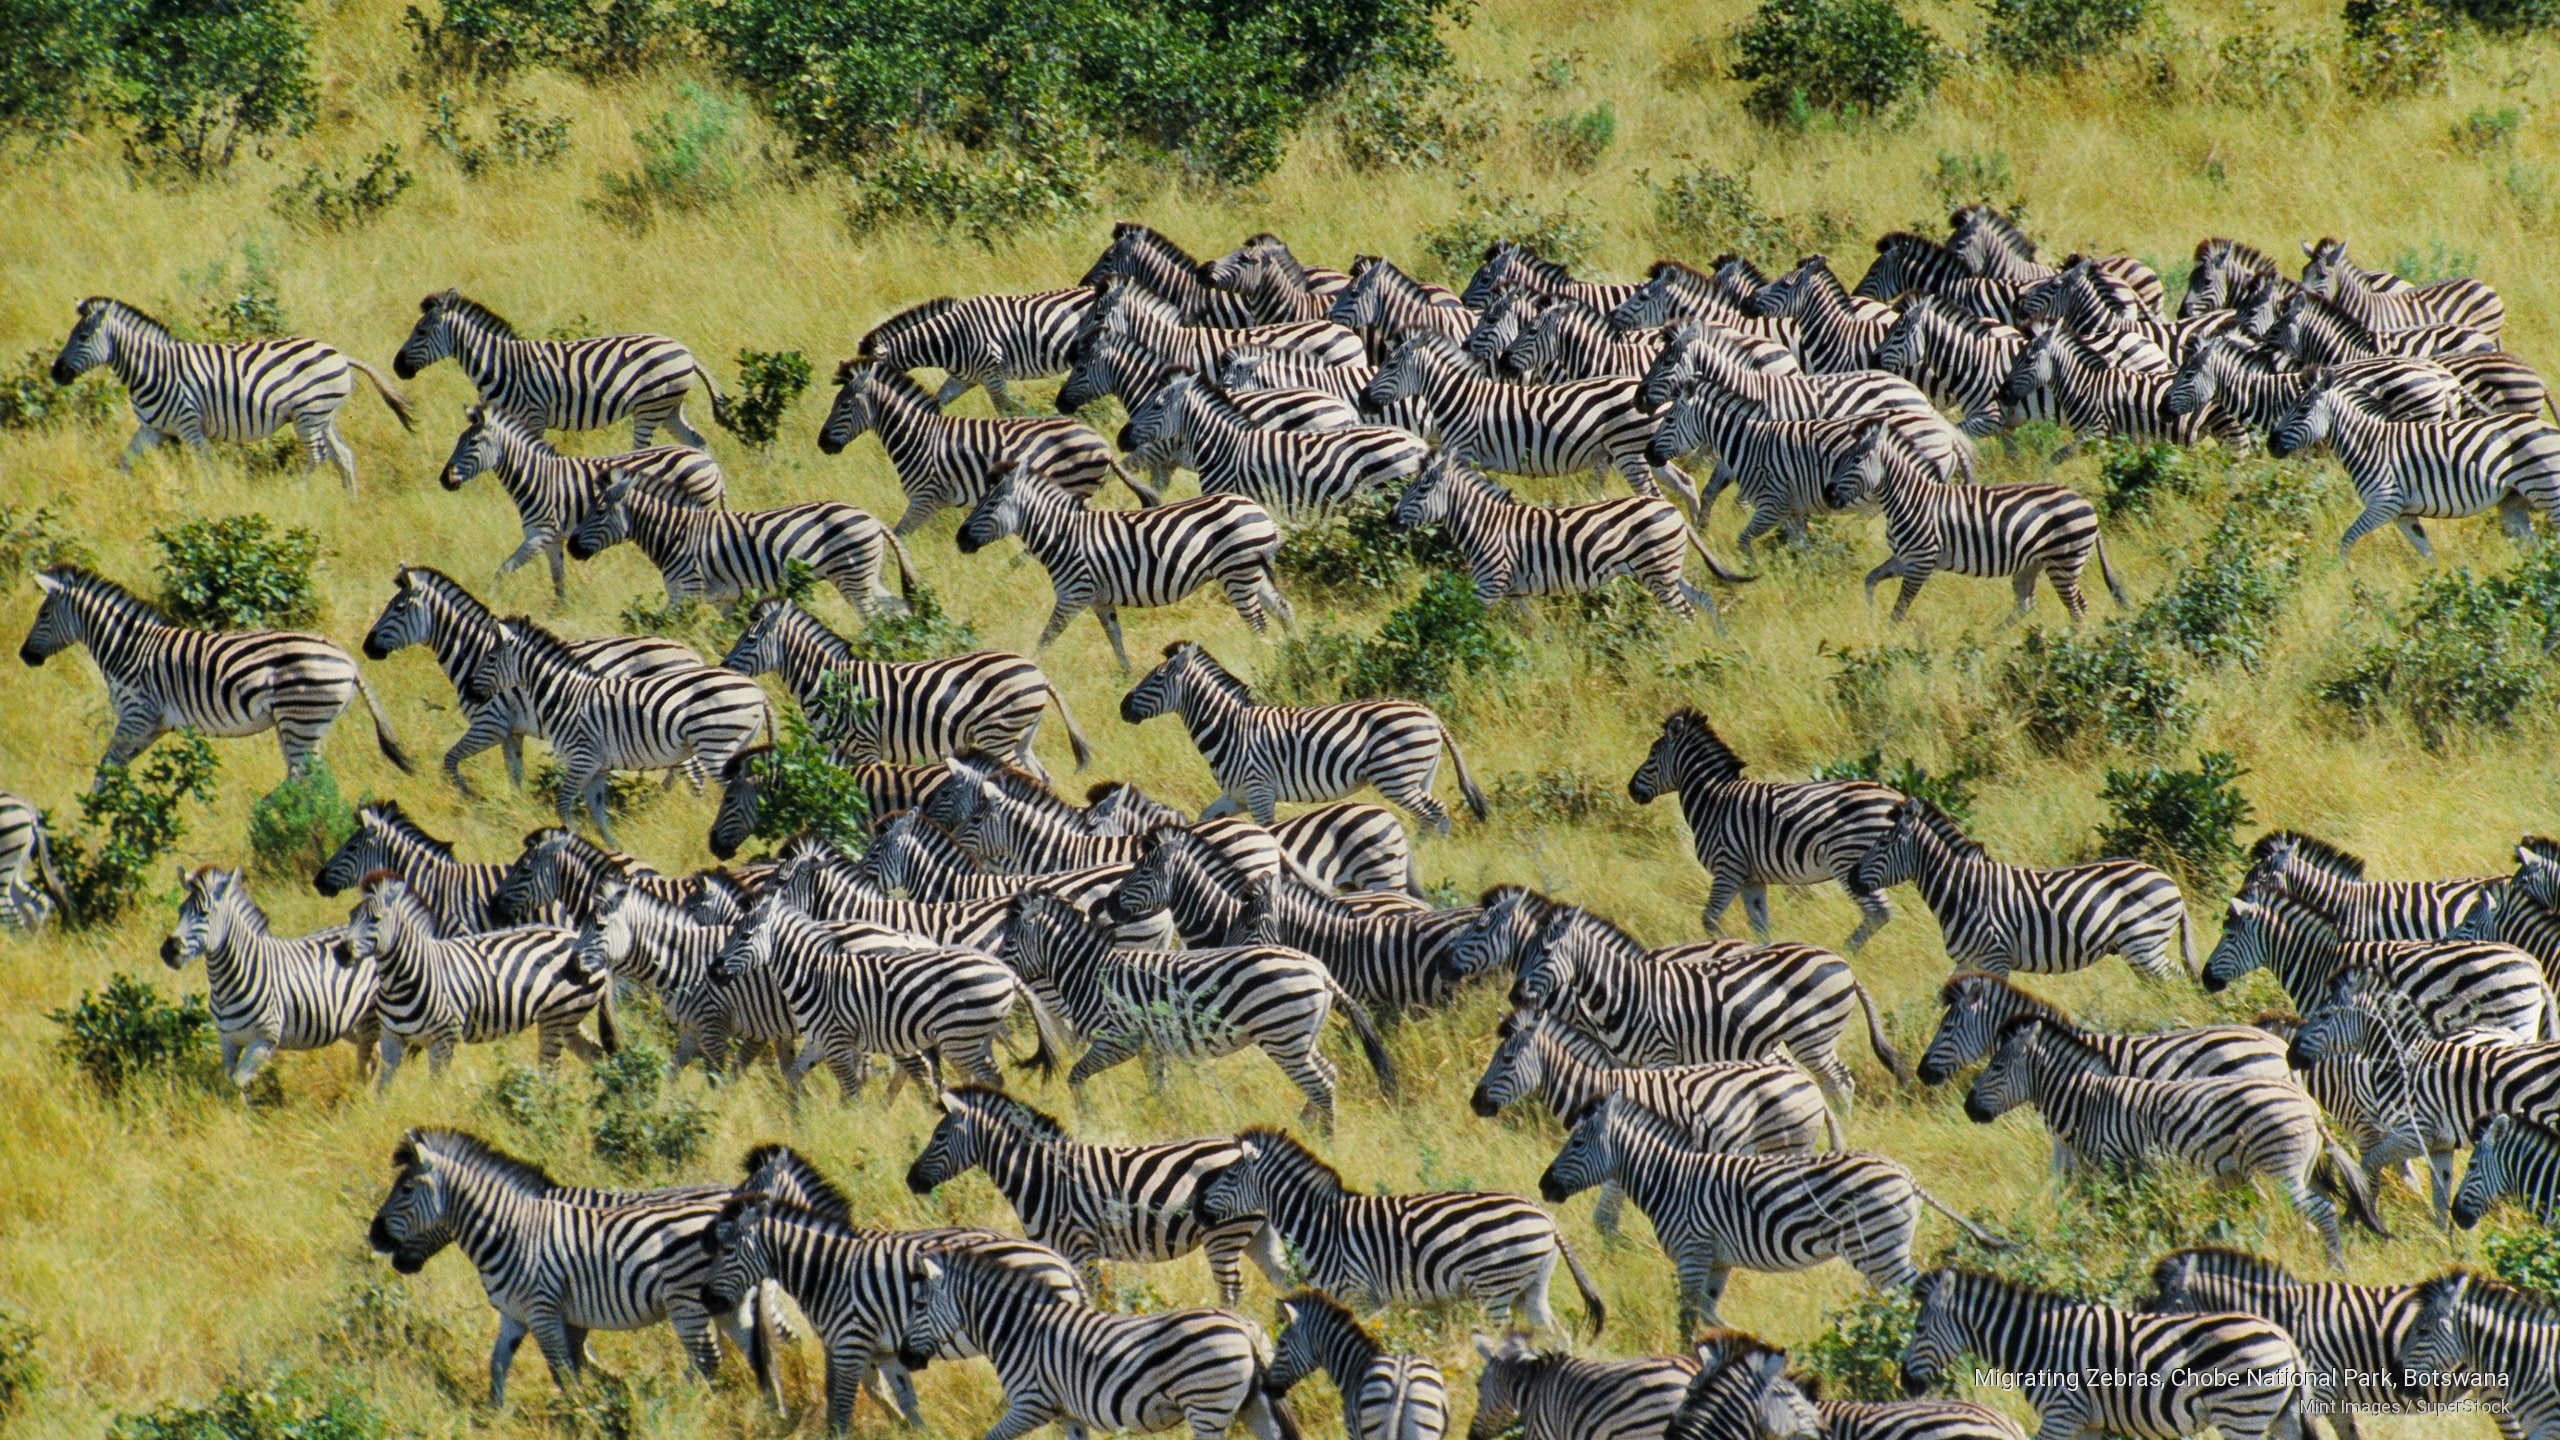 Migrating Zebras, Chobe National Park, Botswana, Africa